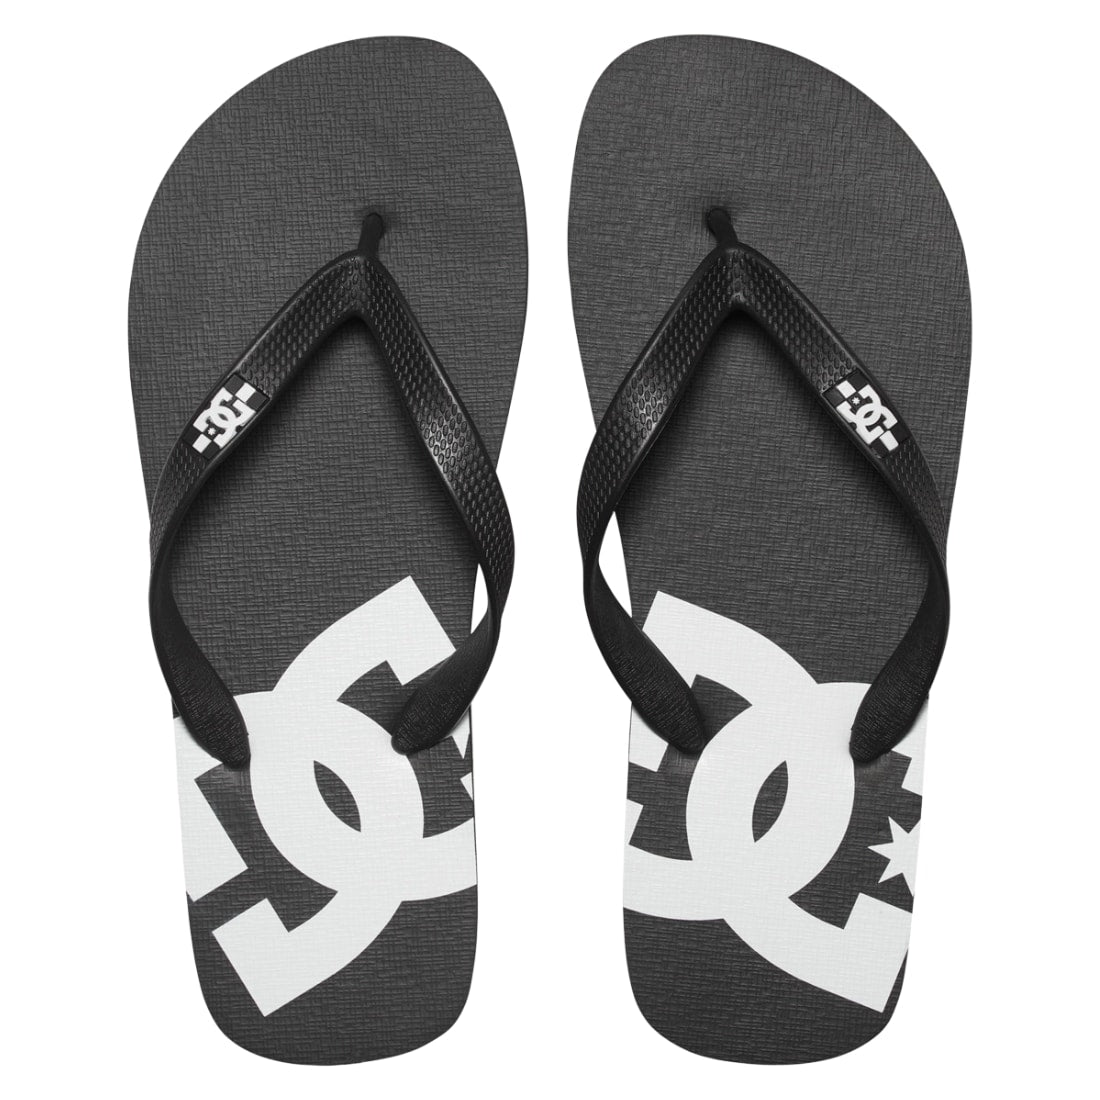 DC Spray Sandals - Black/Black/White SP23 - Mens Flip Flops by DC